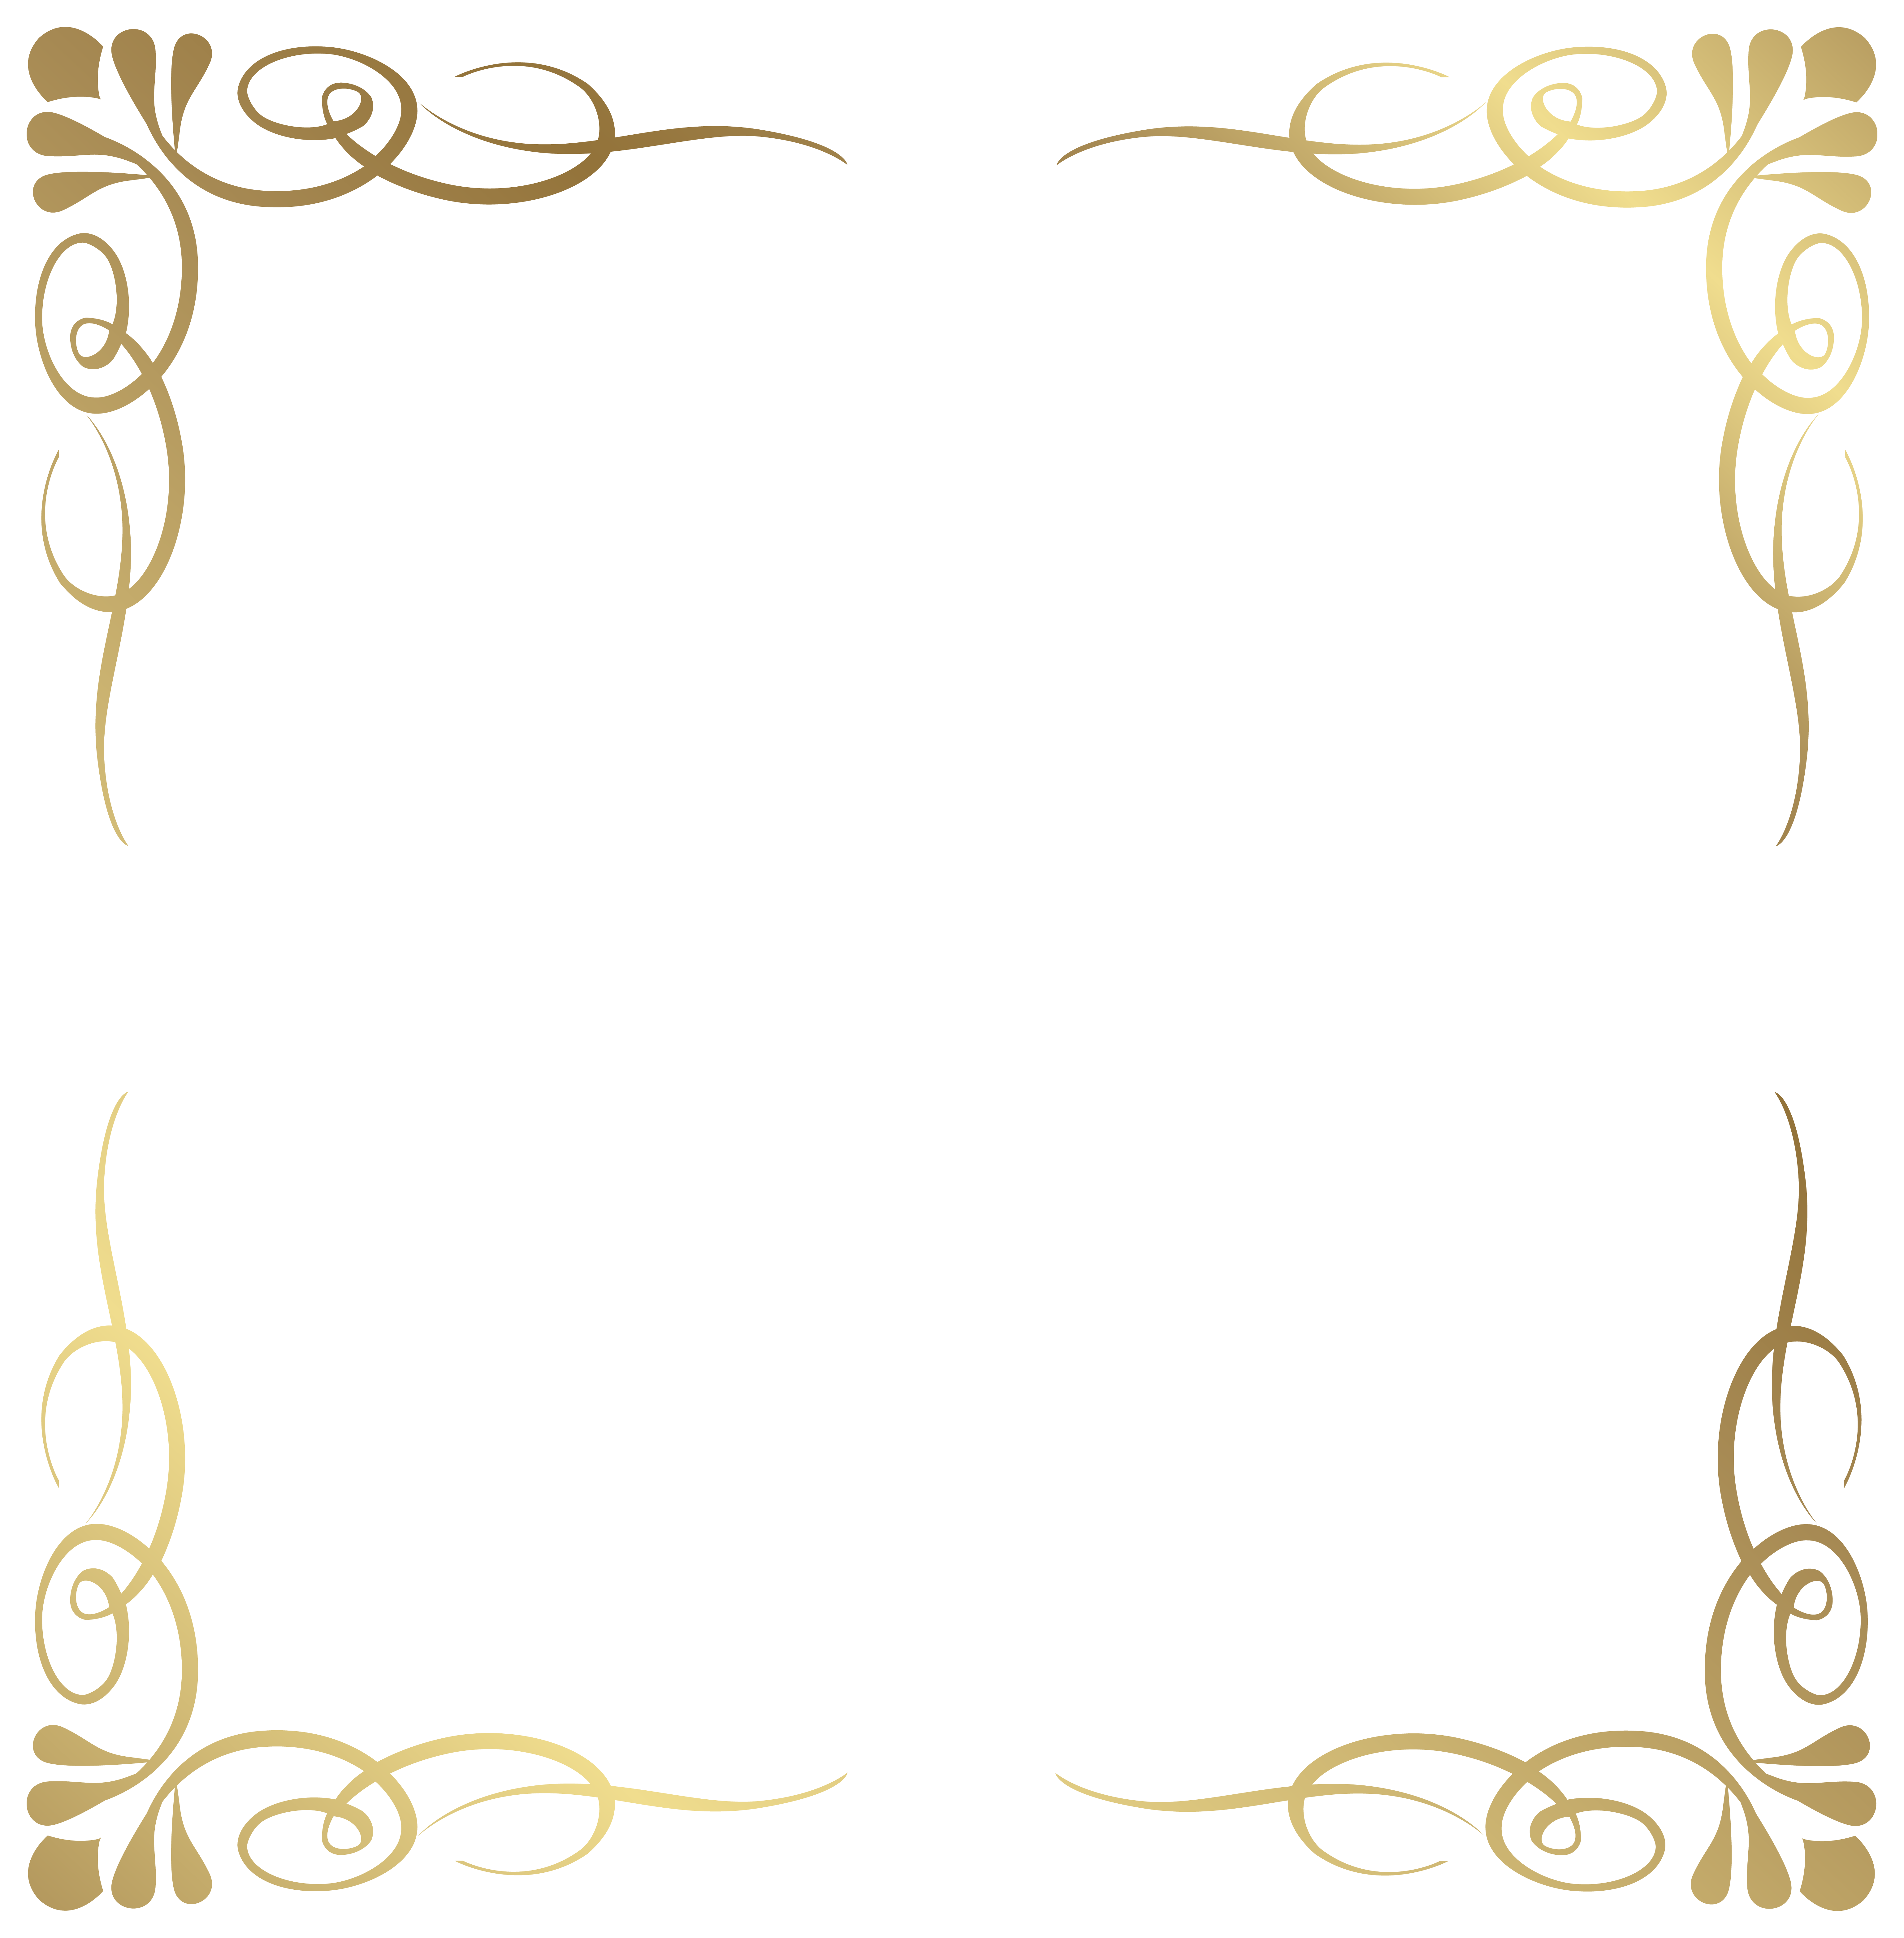 E clipart ornamental. Transparent decorative frame border